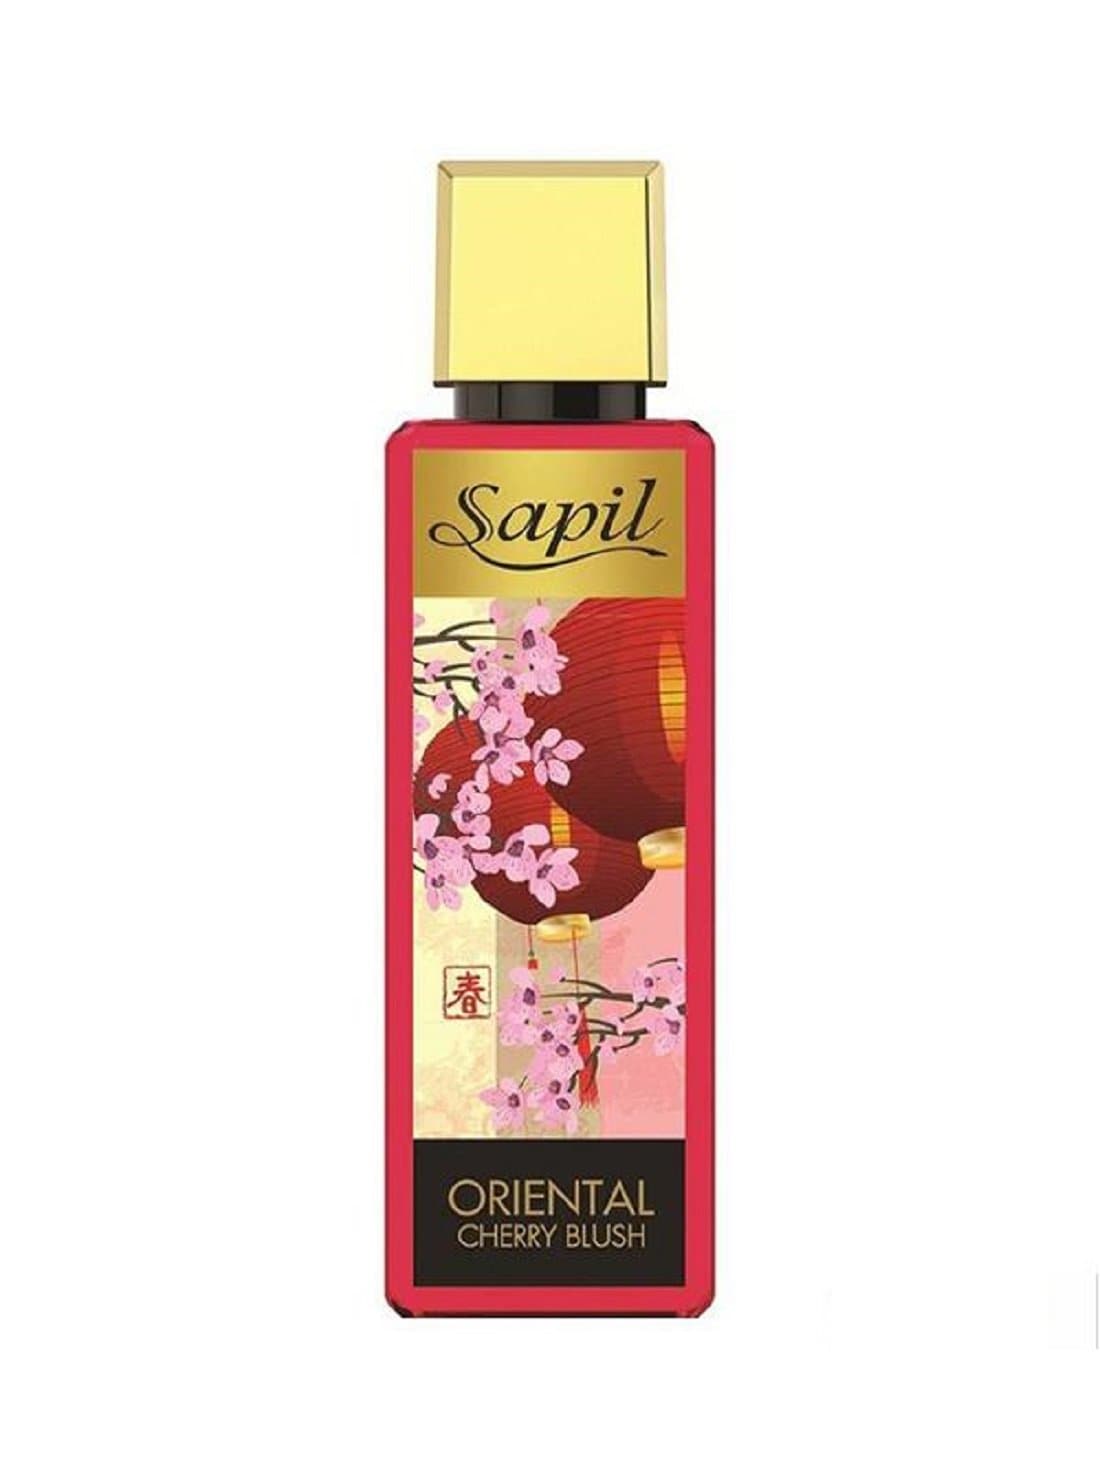 Oriental Cherry Blush for Women Body Mist - 250 ML (8.4 oz) by Sapil - Intense oud